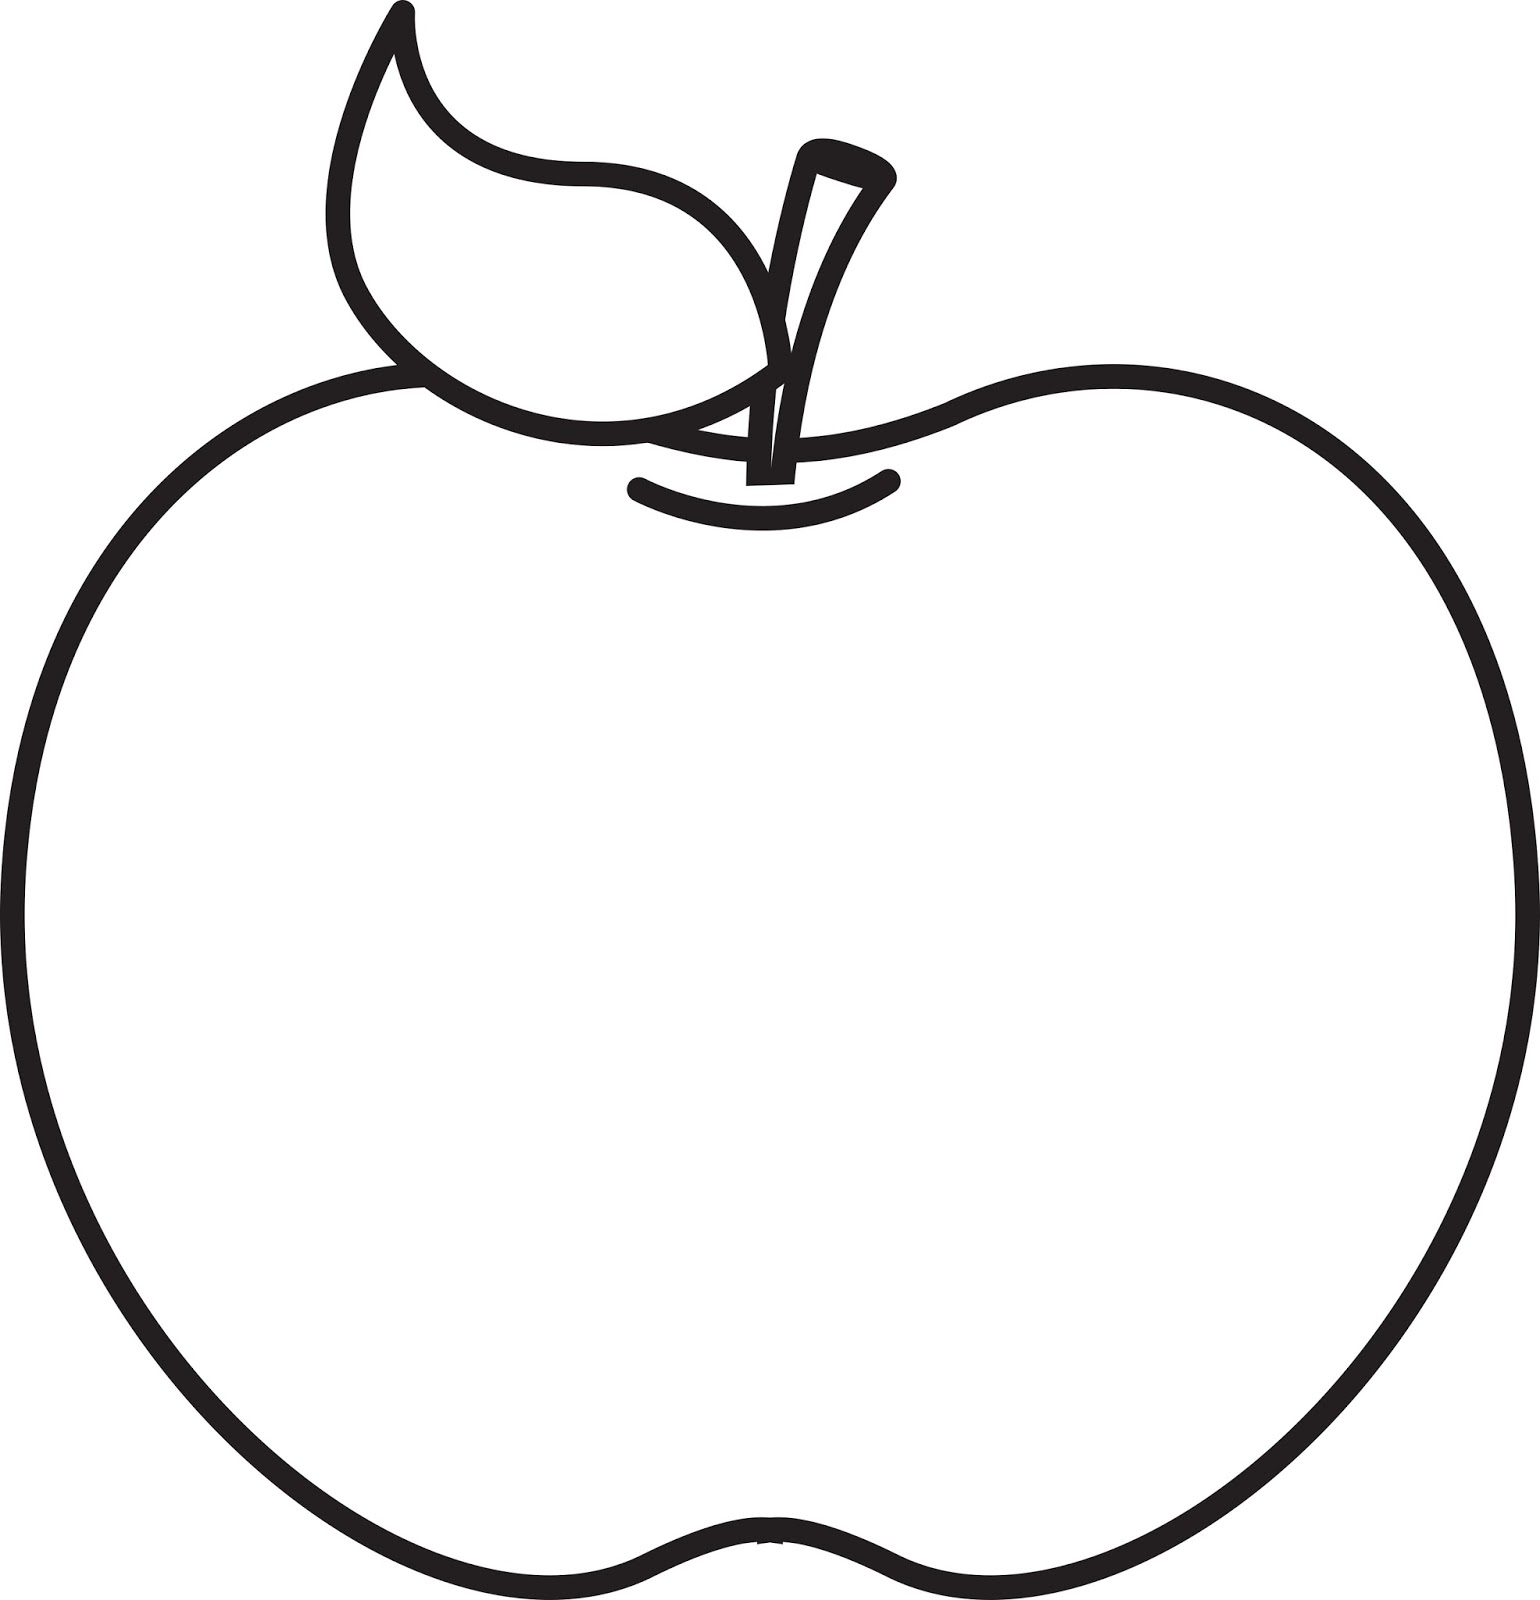 Clipart Of An Apple